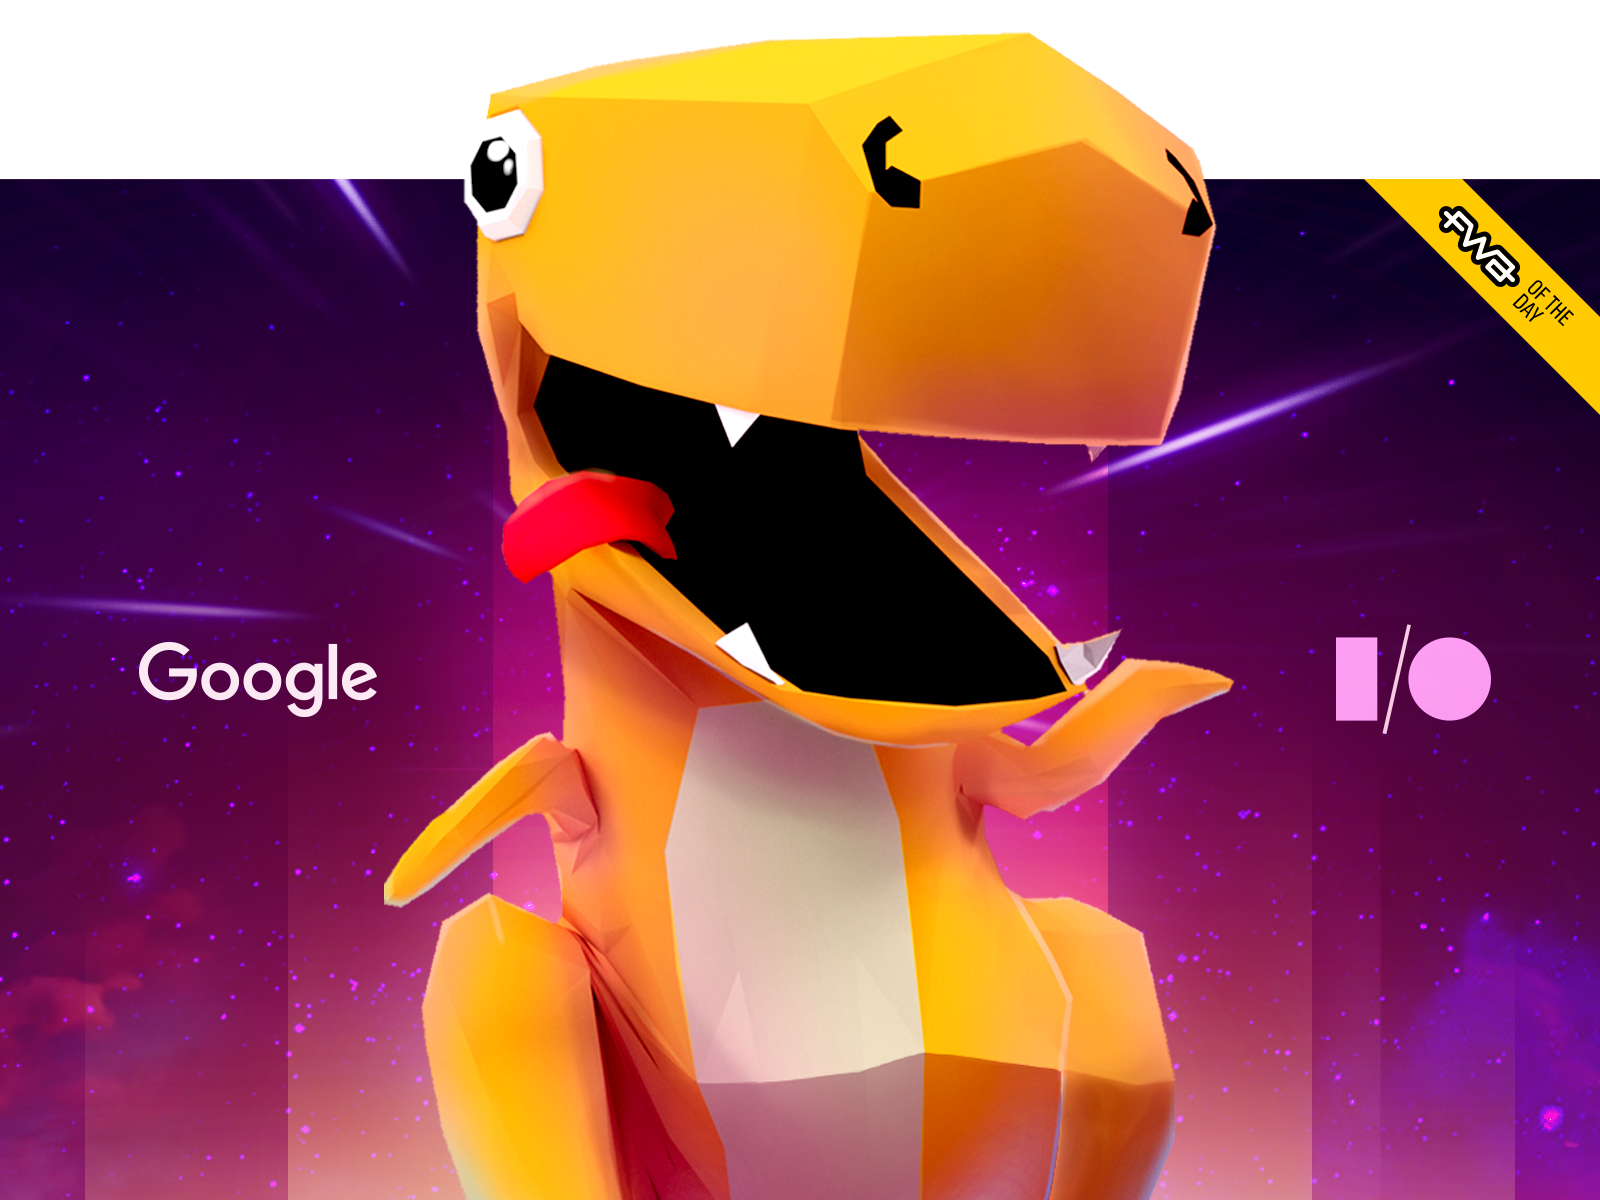 Dino Runner AR Core by Google by Juan Mora for Hook on Dribbble